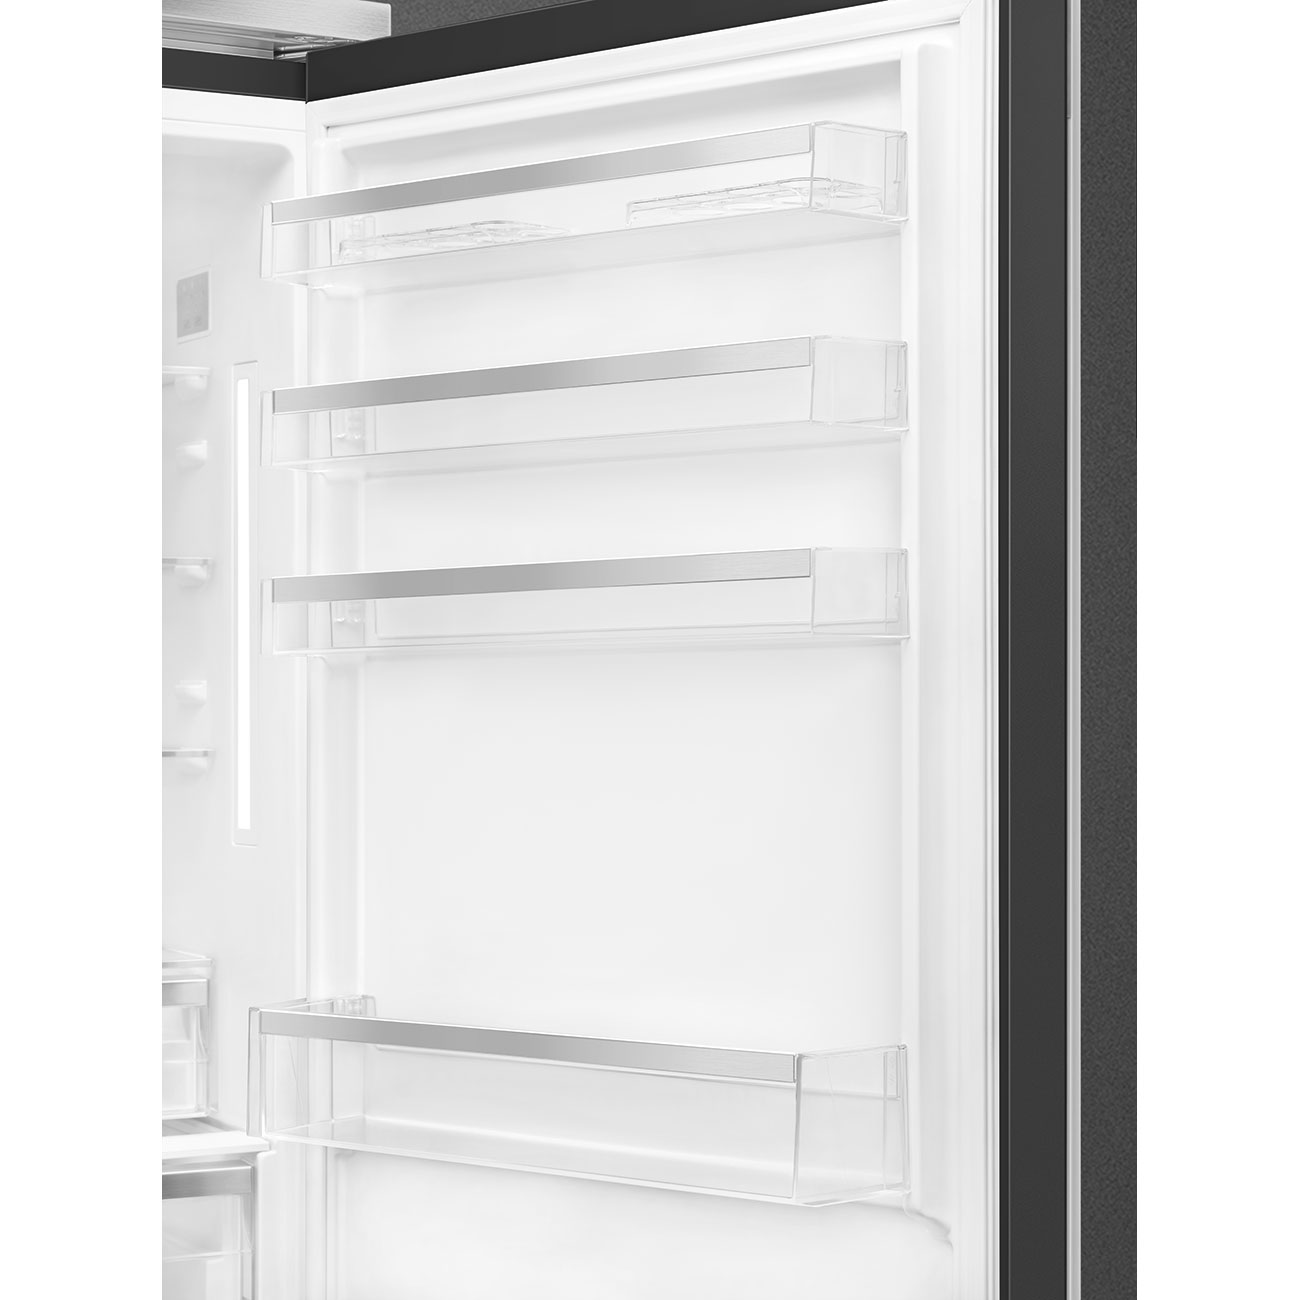 Bottom Mount Free standing refrigerator - Smeg_8